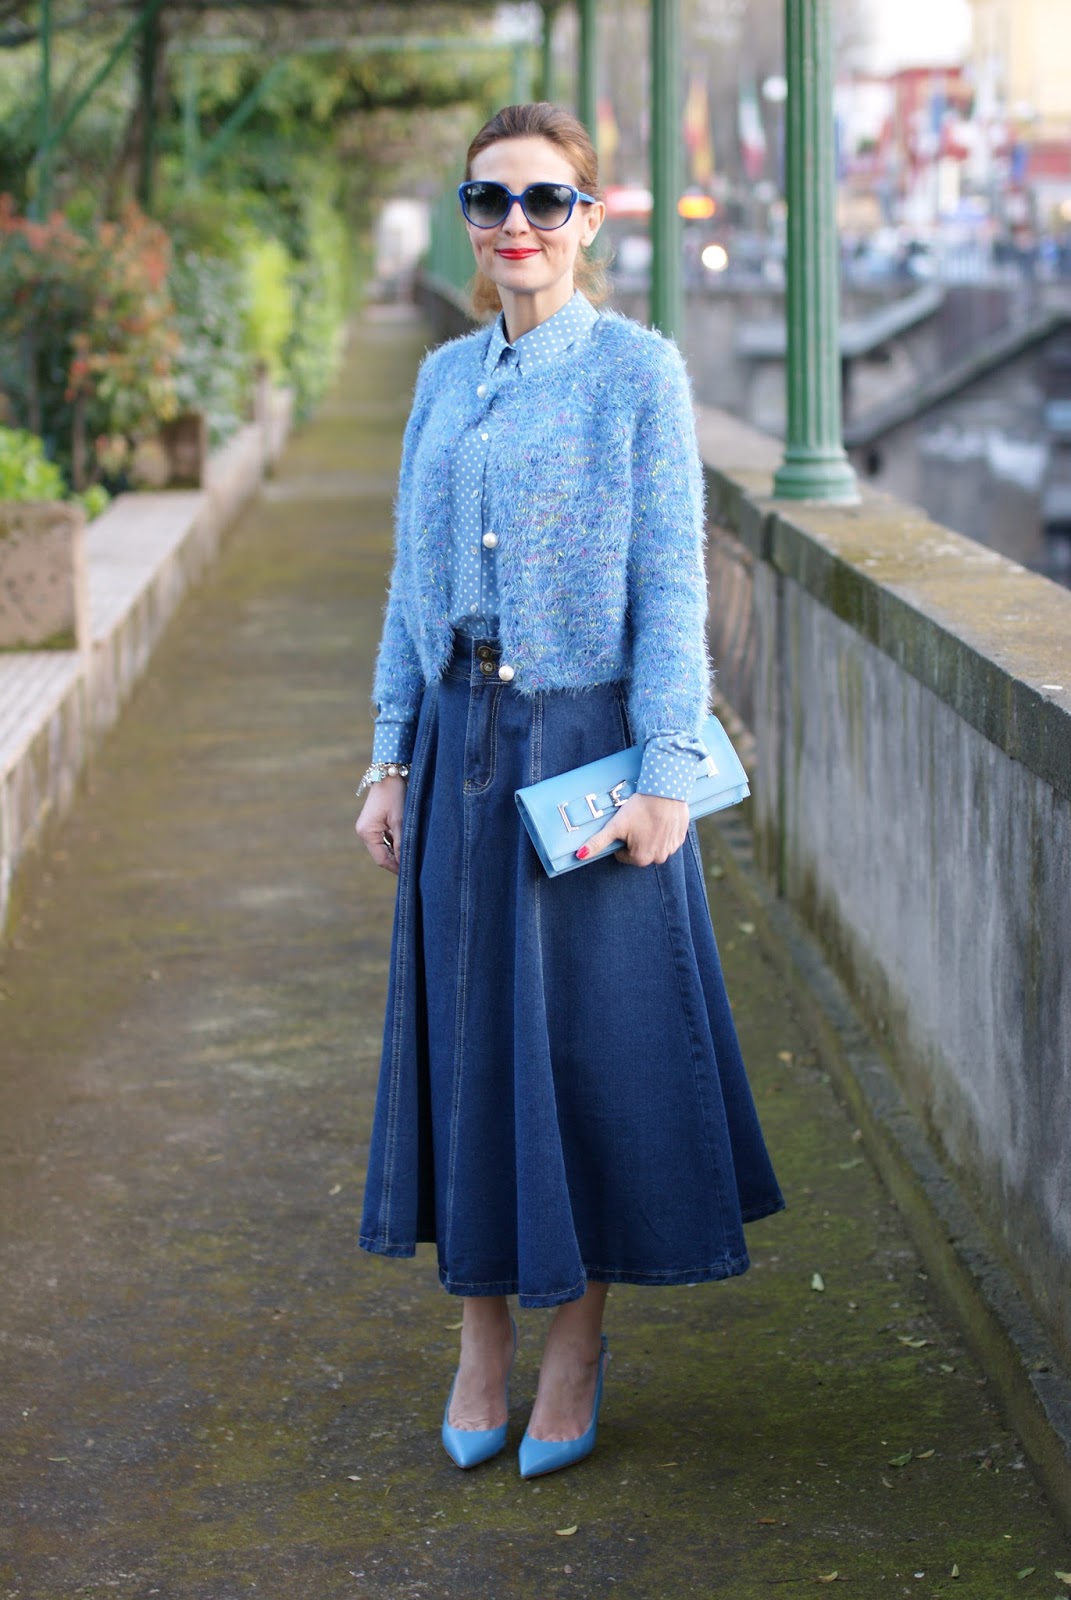 Denim midi circle skirt, star print shirt and Le Silla shoes on Fashion and Cookies fashion blog, fashion blogger style